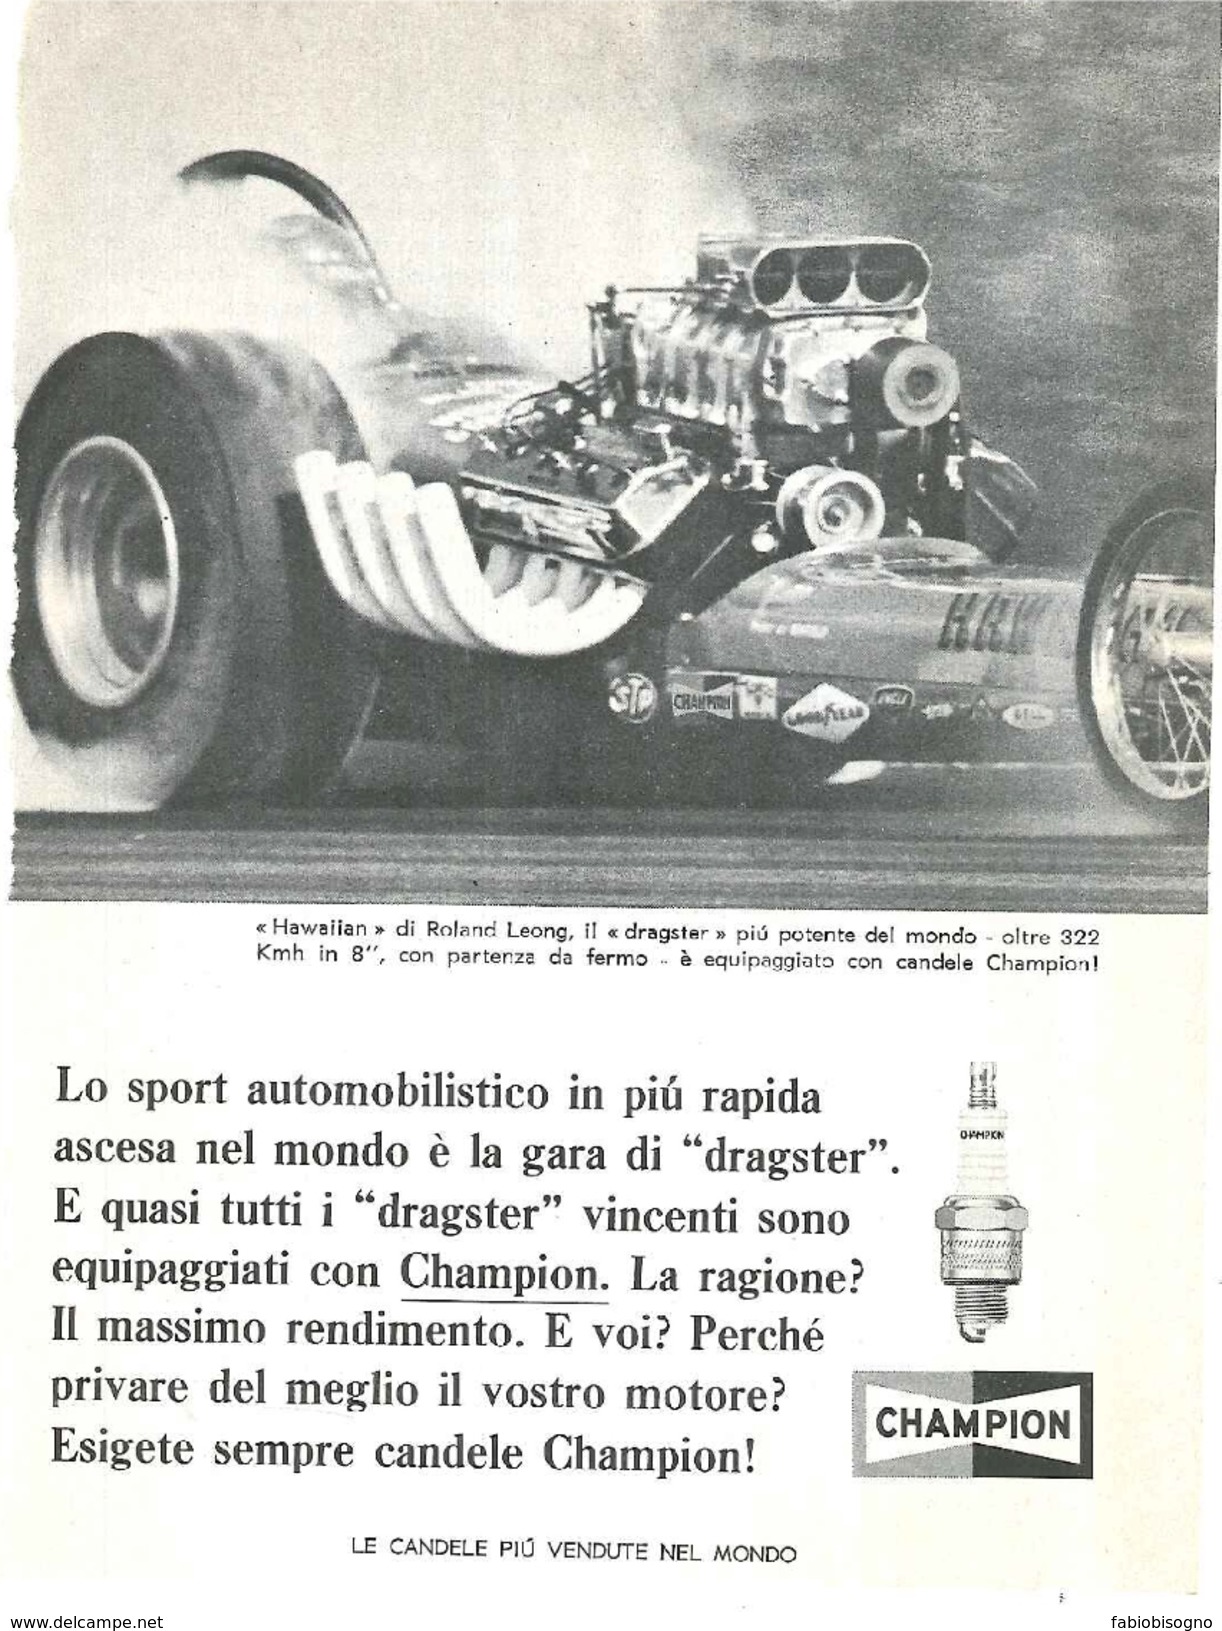 1966 - Roland Leong - Dragster HAWAIIAN - Candele CHAMPION - 1 P. Pubblicità Cm. 13 X 18 - Car Racing - F1